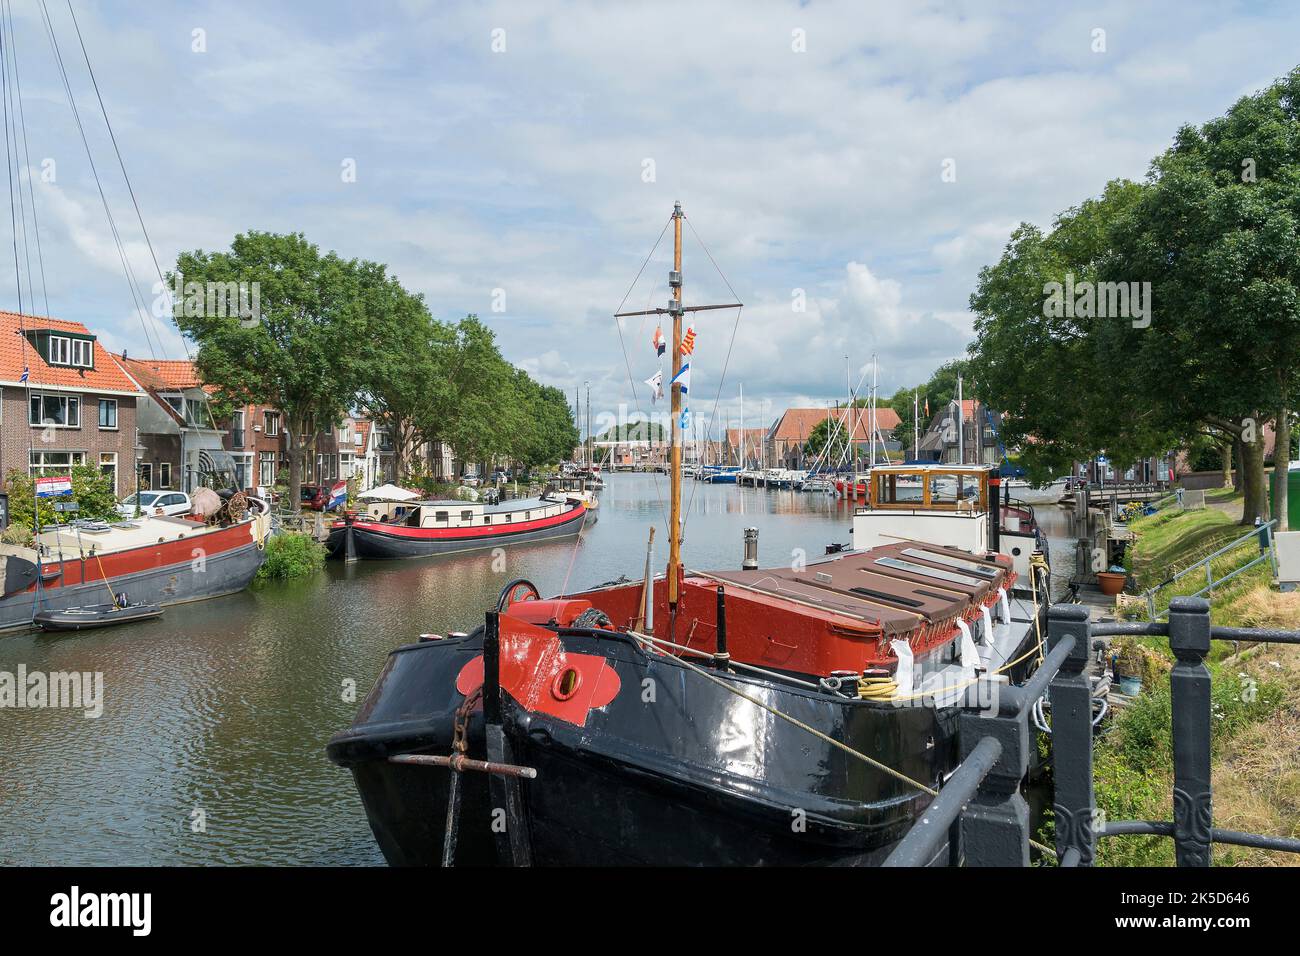 Netherlands, Enkhuizen, old town, Zuider Havendijk, harbor, barges Stock Photo